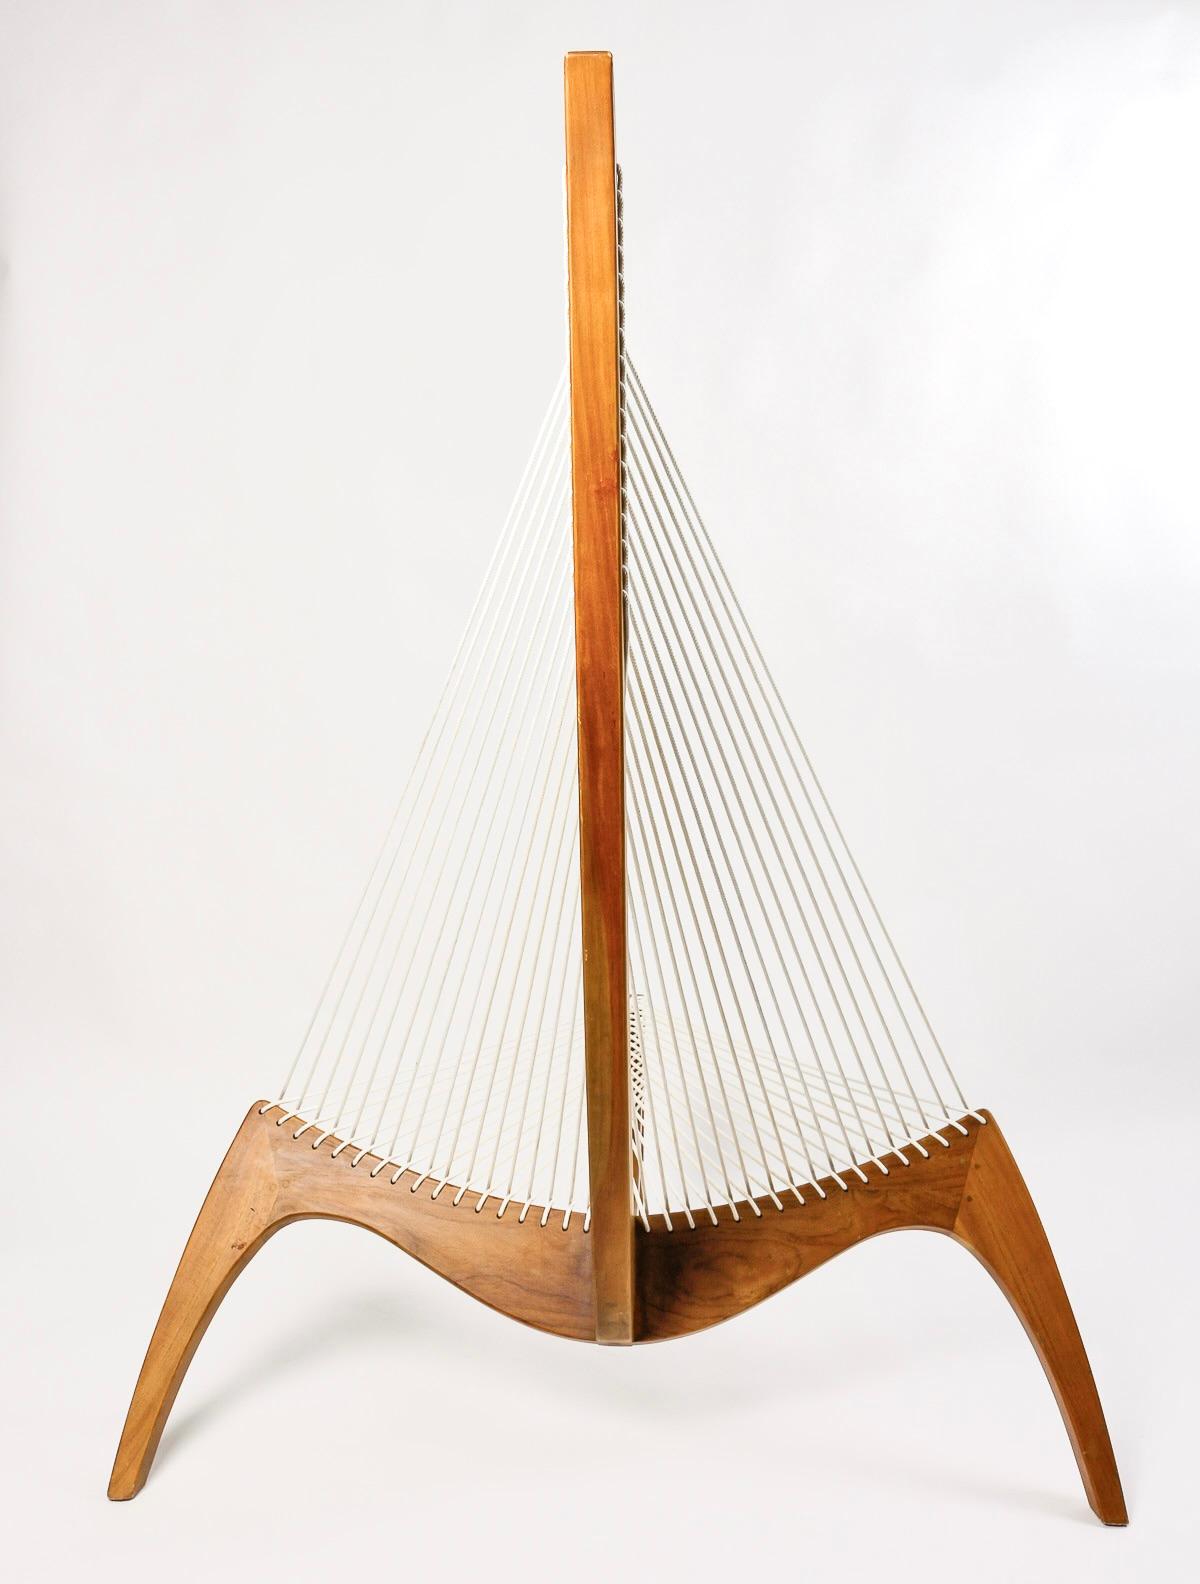 1970 Paire de chaises harpe par Jørgen Høvelskov pour Christensen & Larsen Møbelhandværk. 1